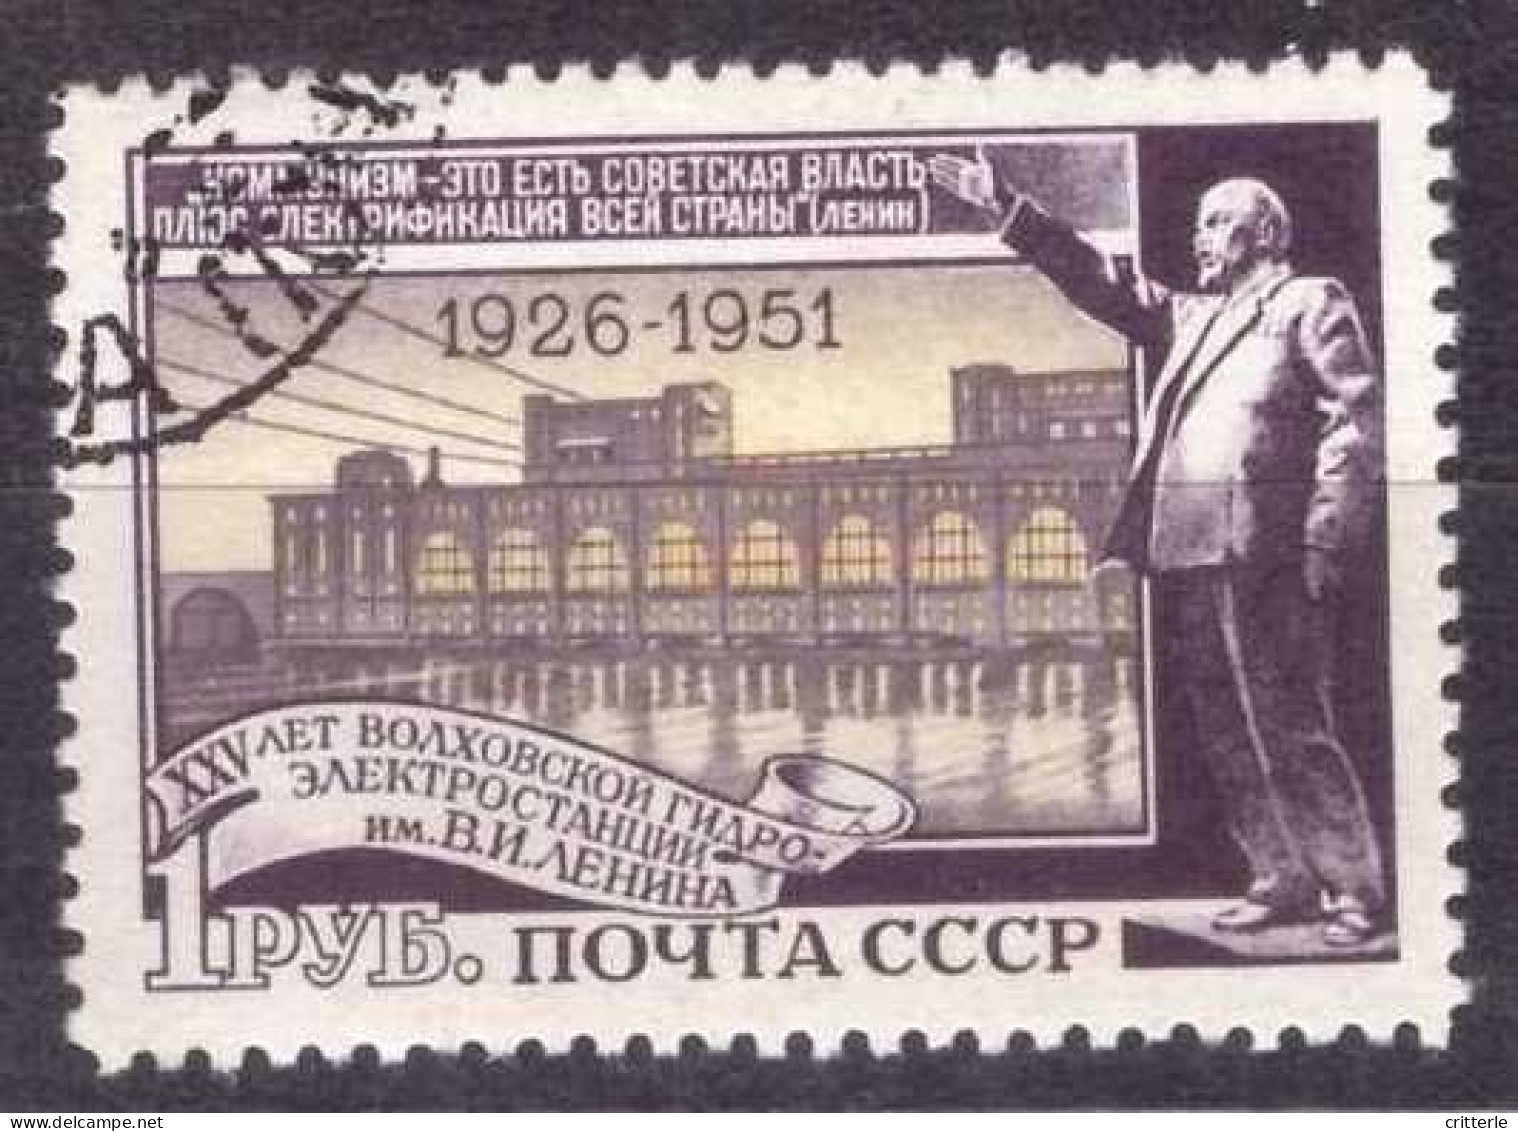 Sowjetunion Michel Nr. 1614 Gestempelt - Used Stamps